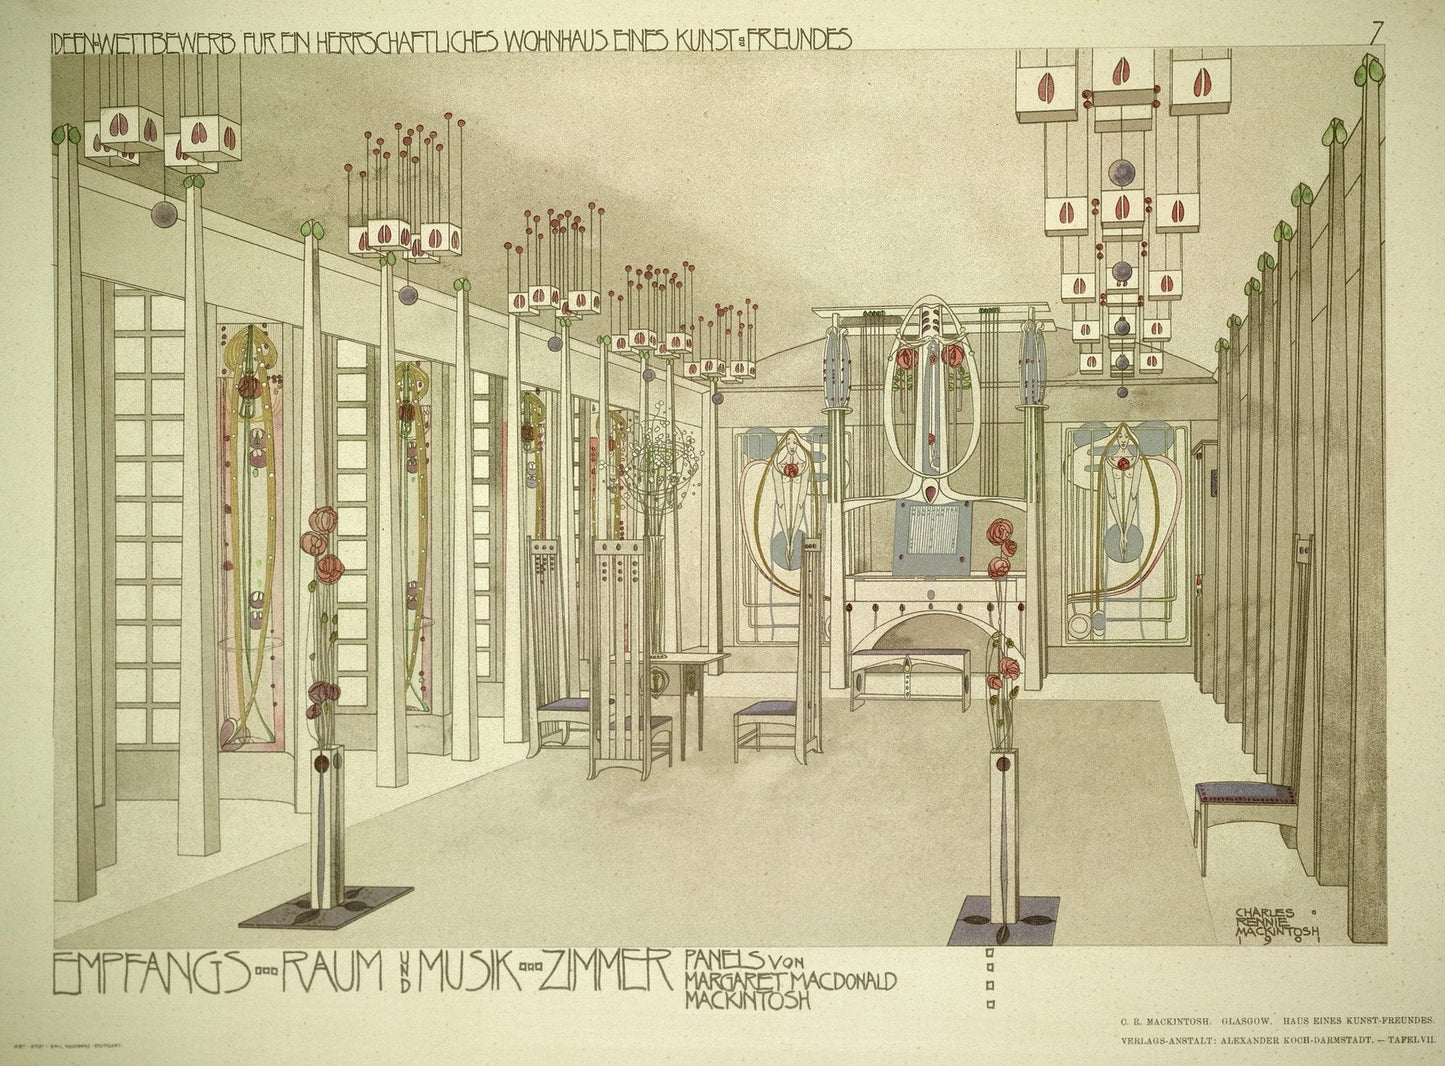 The Music Room Poster, Glasgow (1901) | Art nouveau prints | Charles Rennie Mackintosh Posters, Prints, & Visual Artwork The Trumpet Shop   